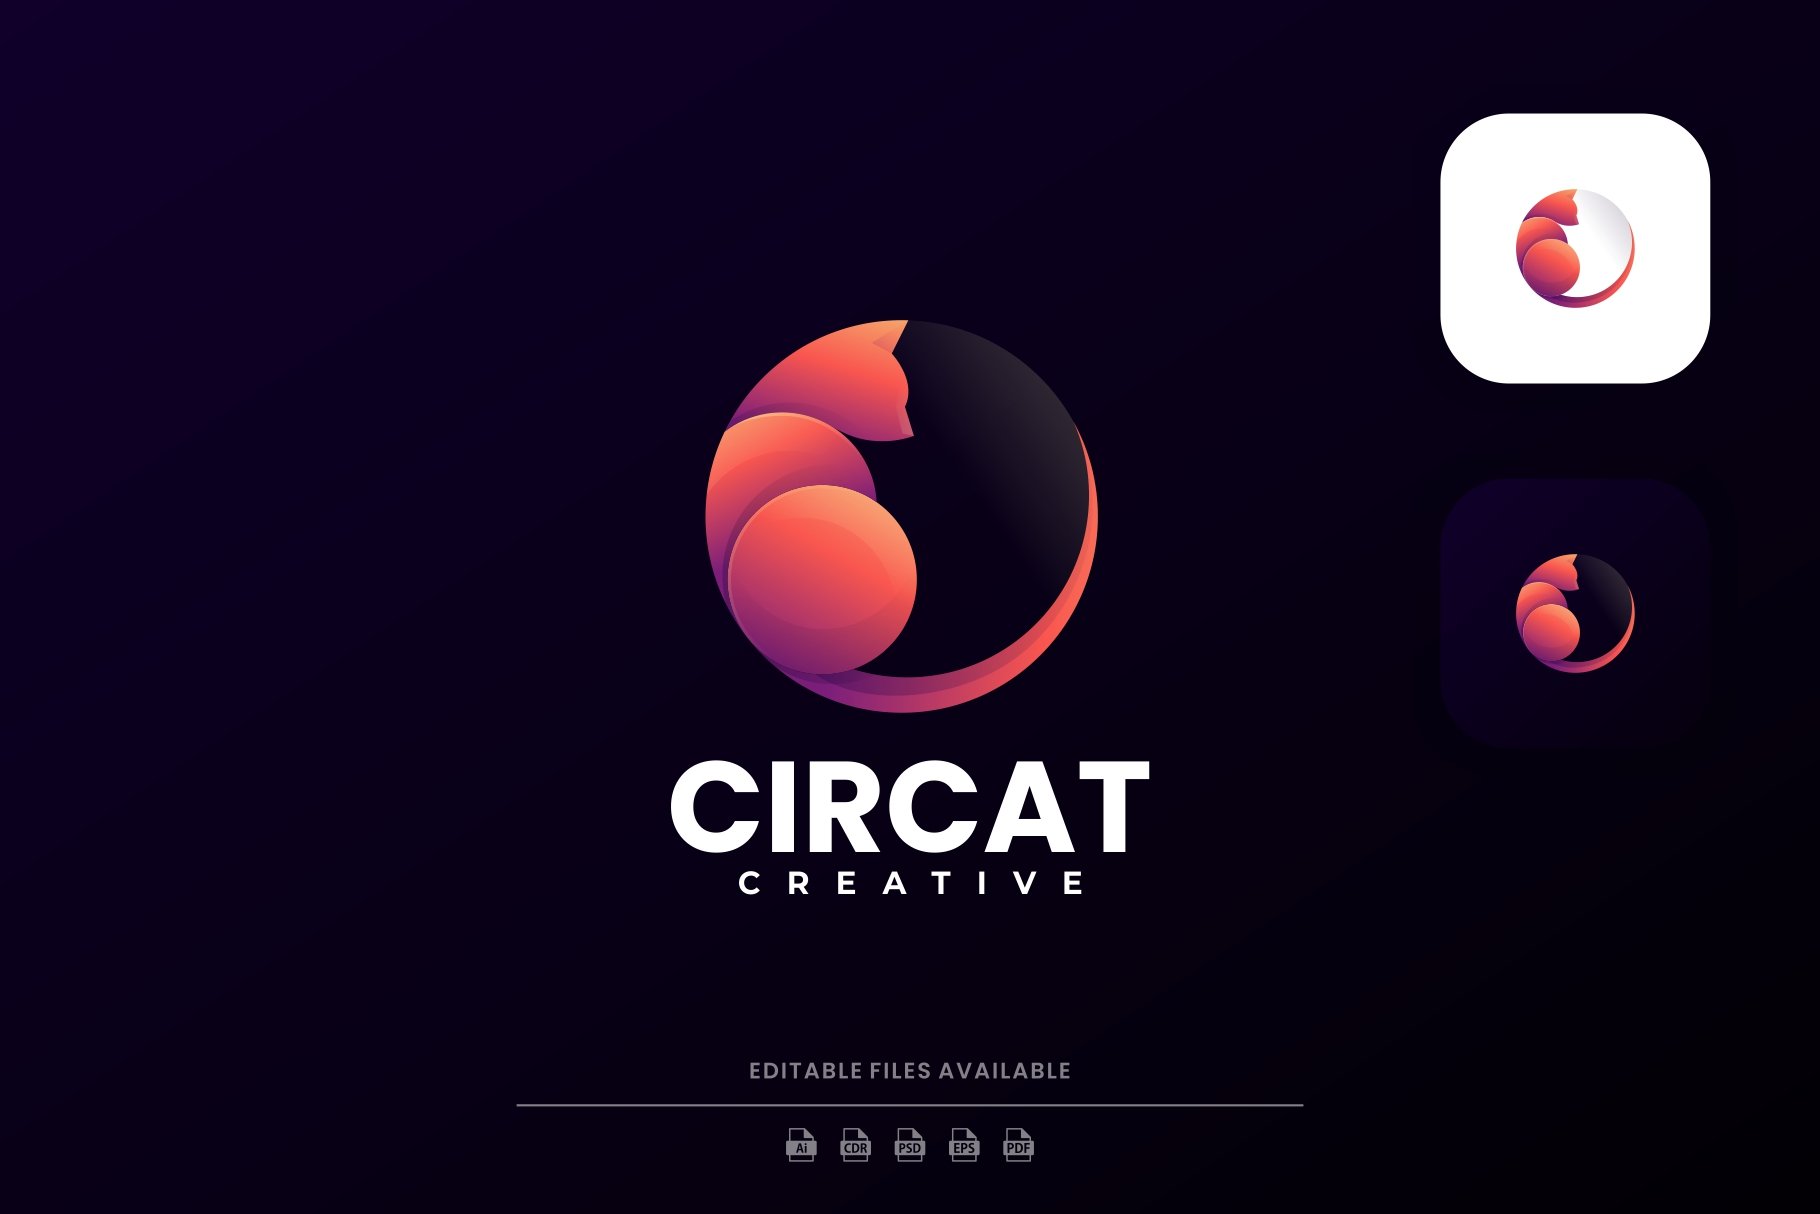 Circle Cat Gradient Logo cover image.